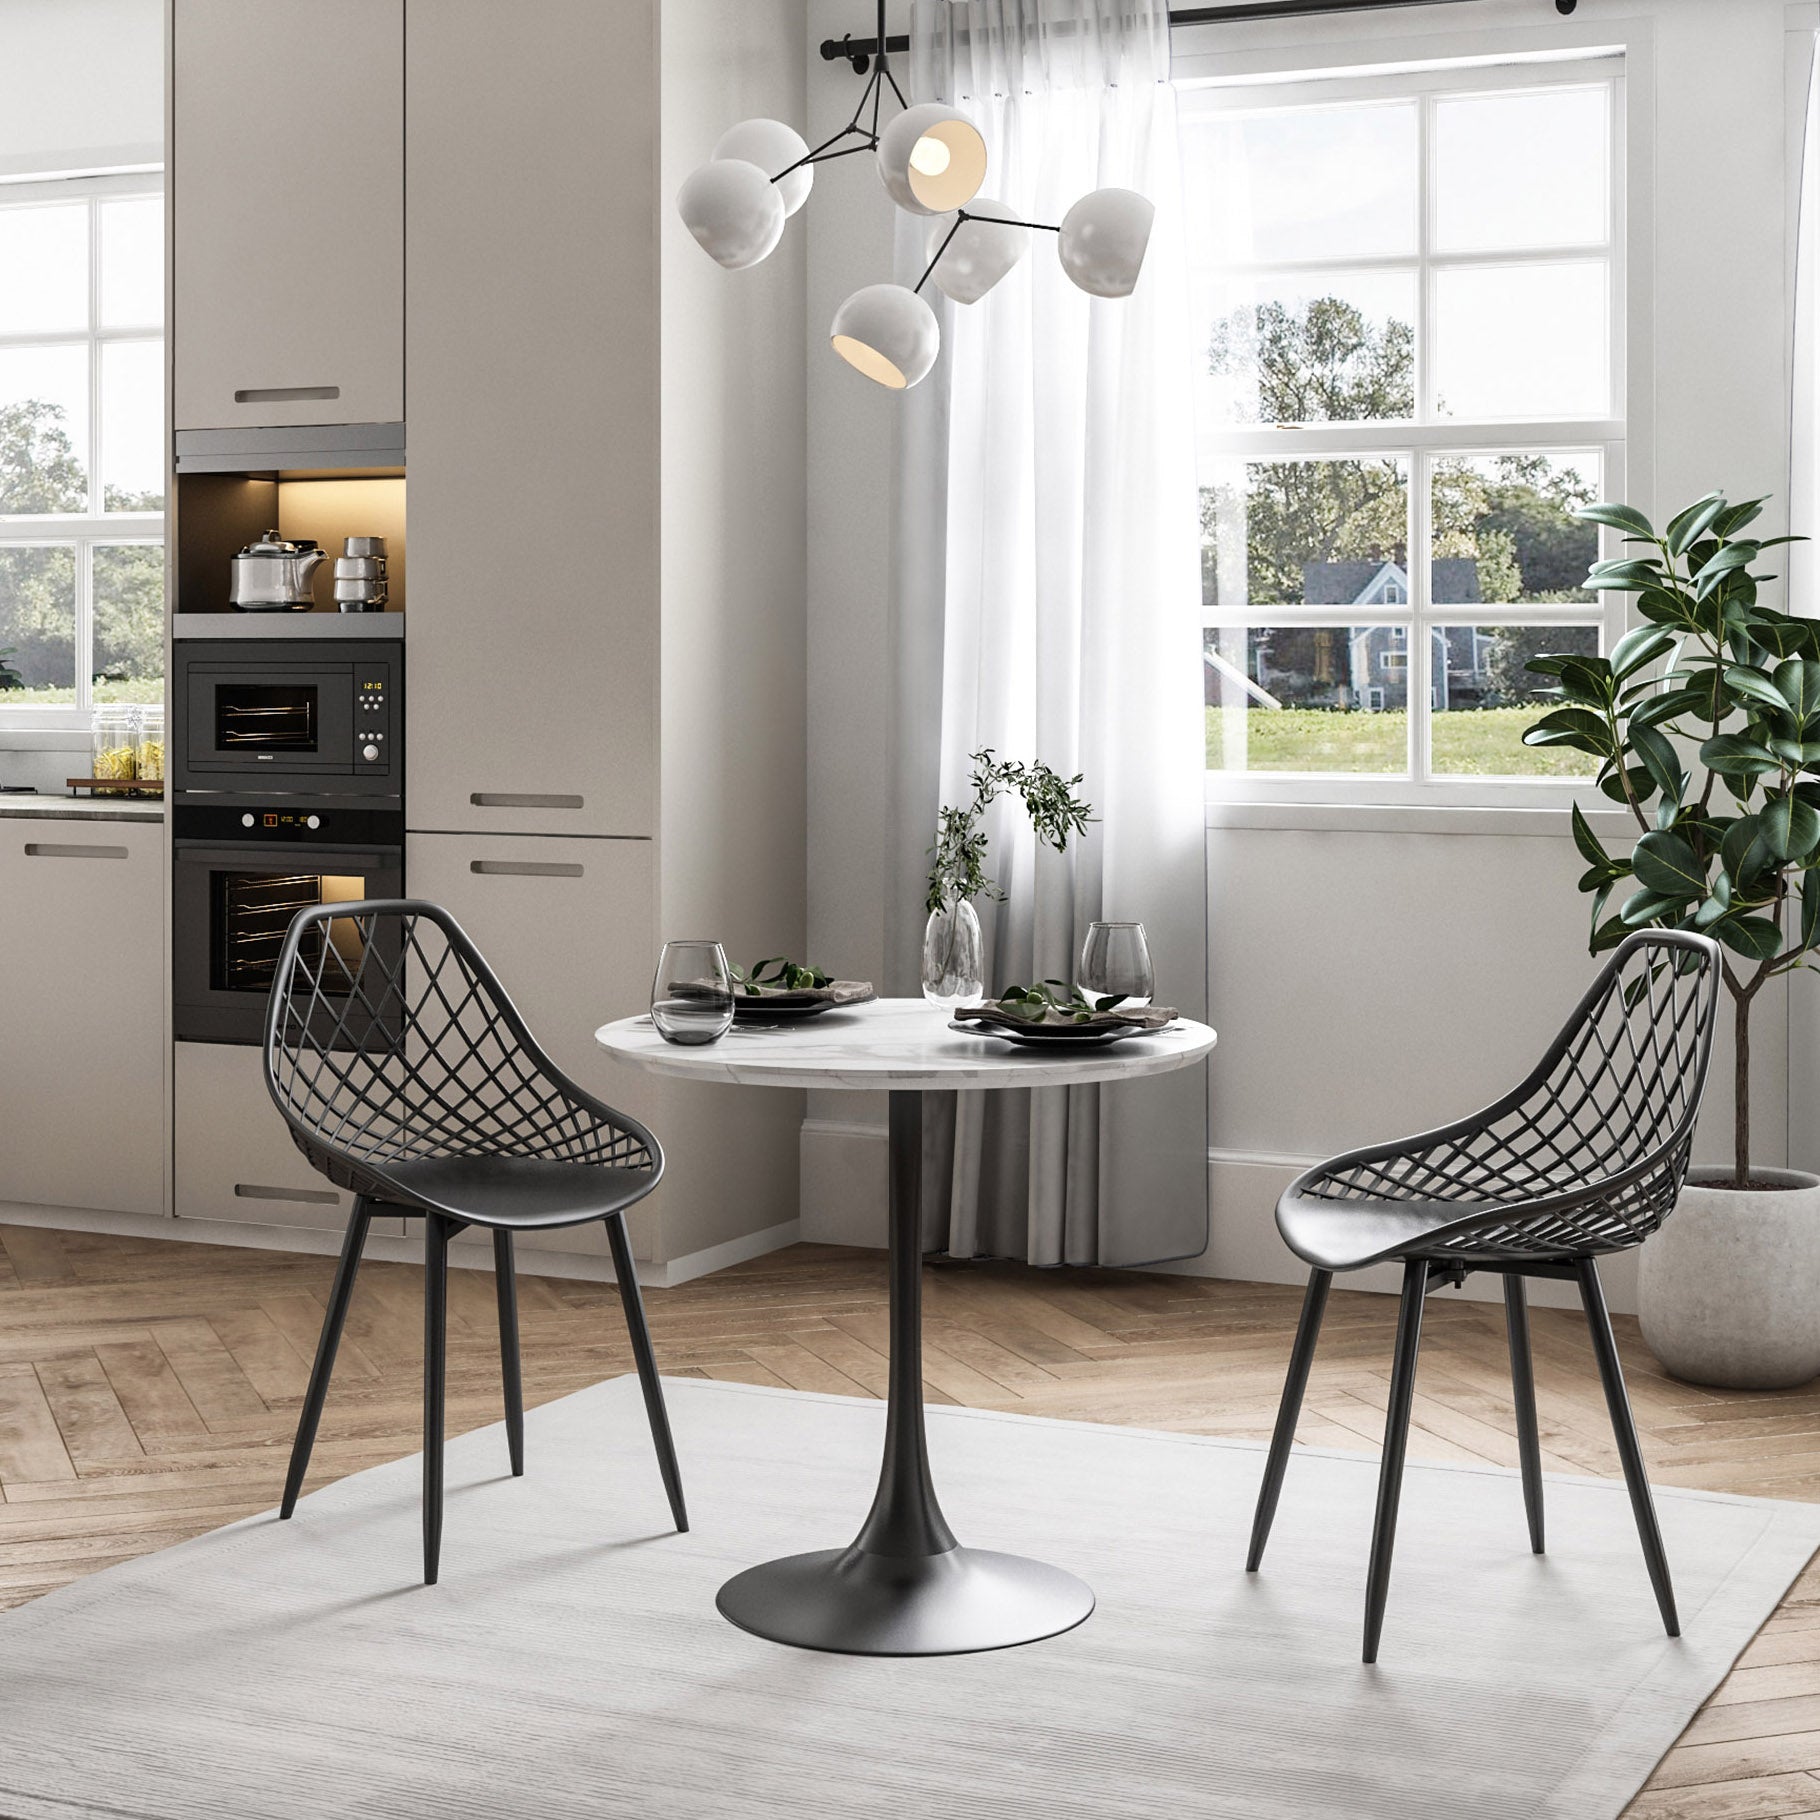 Kurv™ Indoor Outdoor Dining Chair - Black with black legs - Set of 2